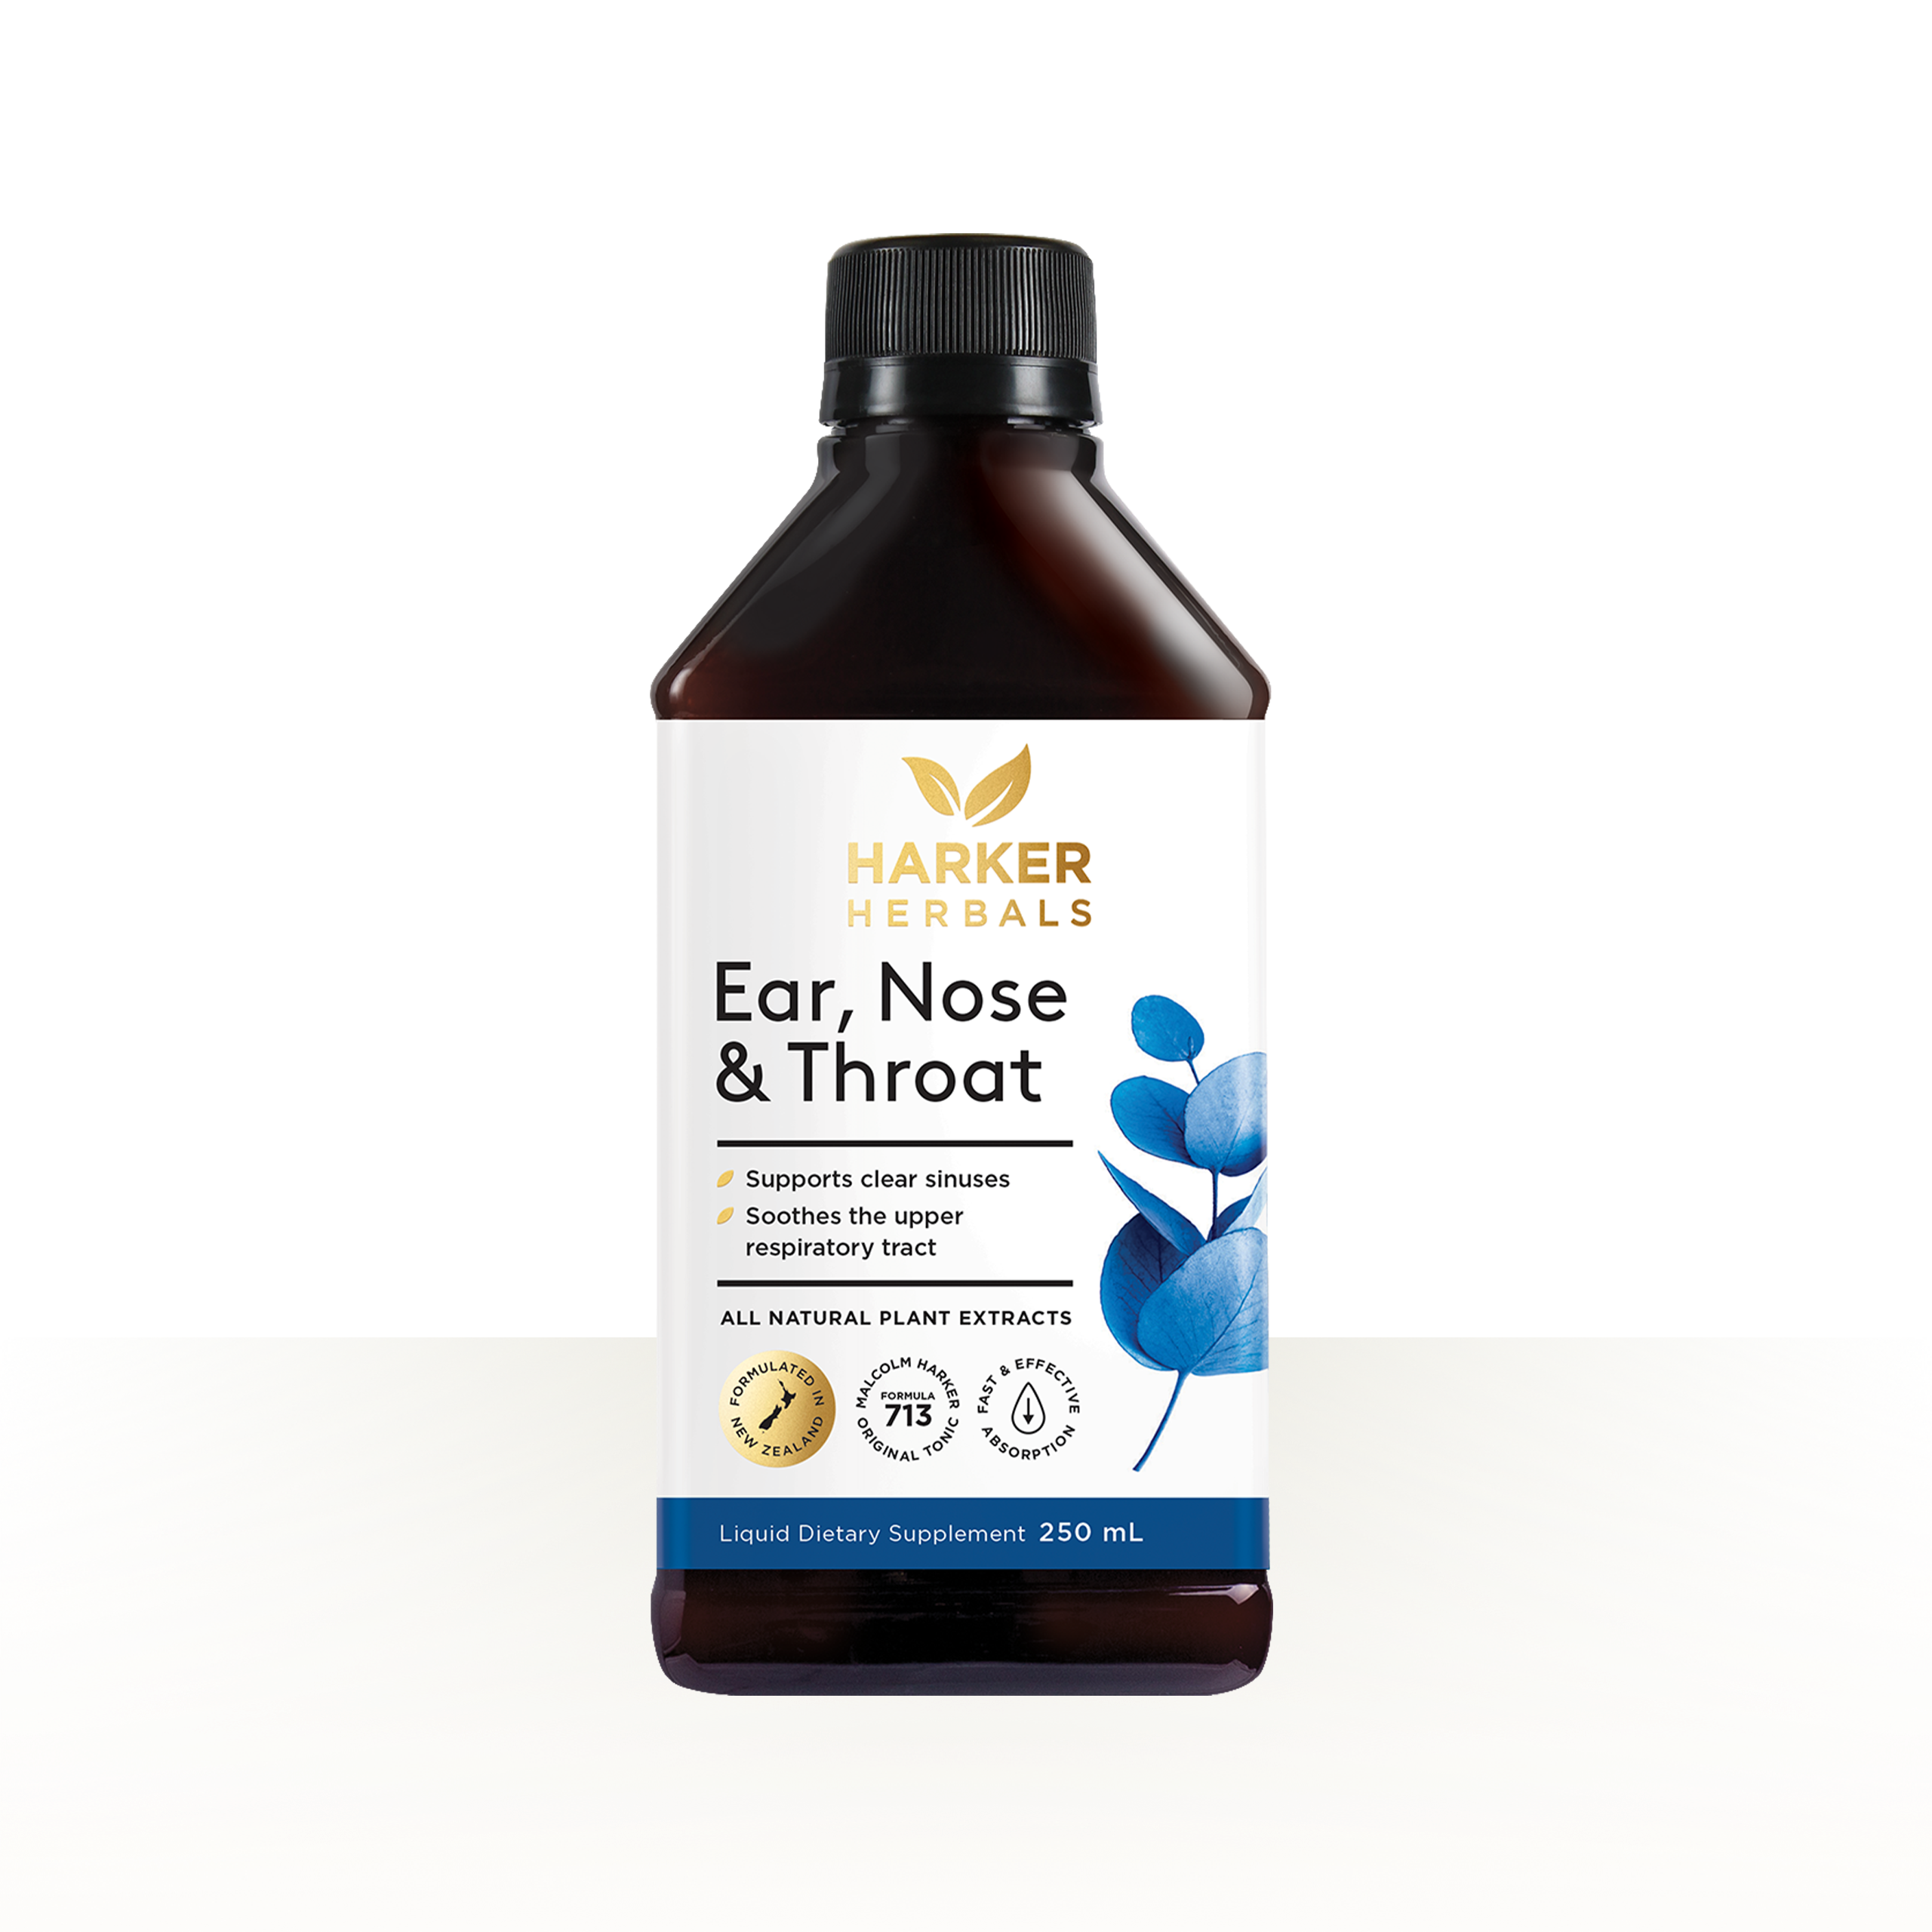 Ear, Nose & Throat Tonic